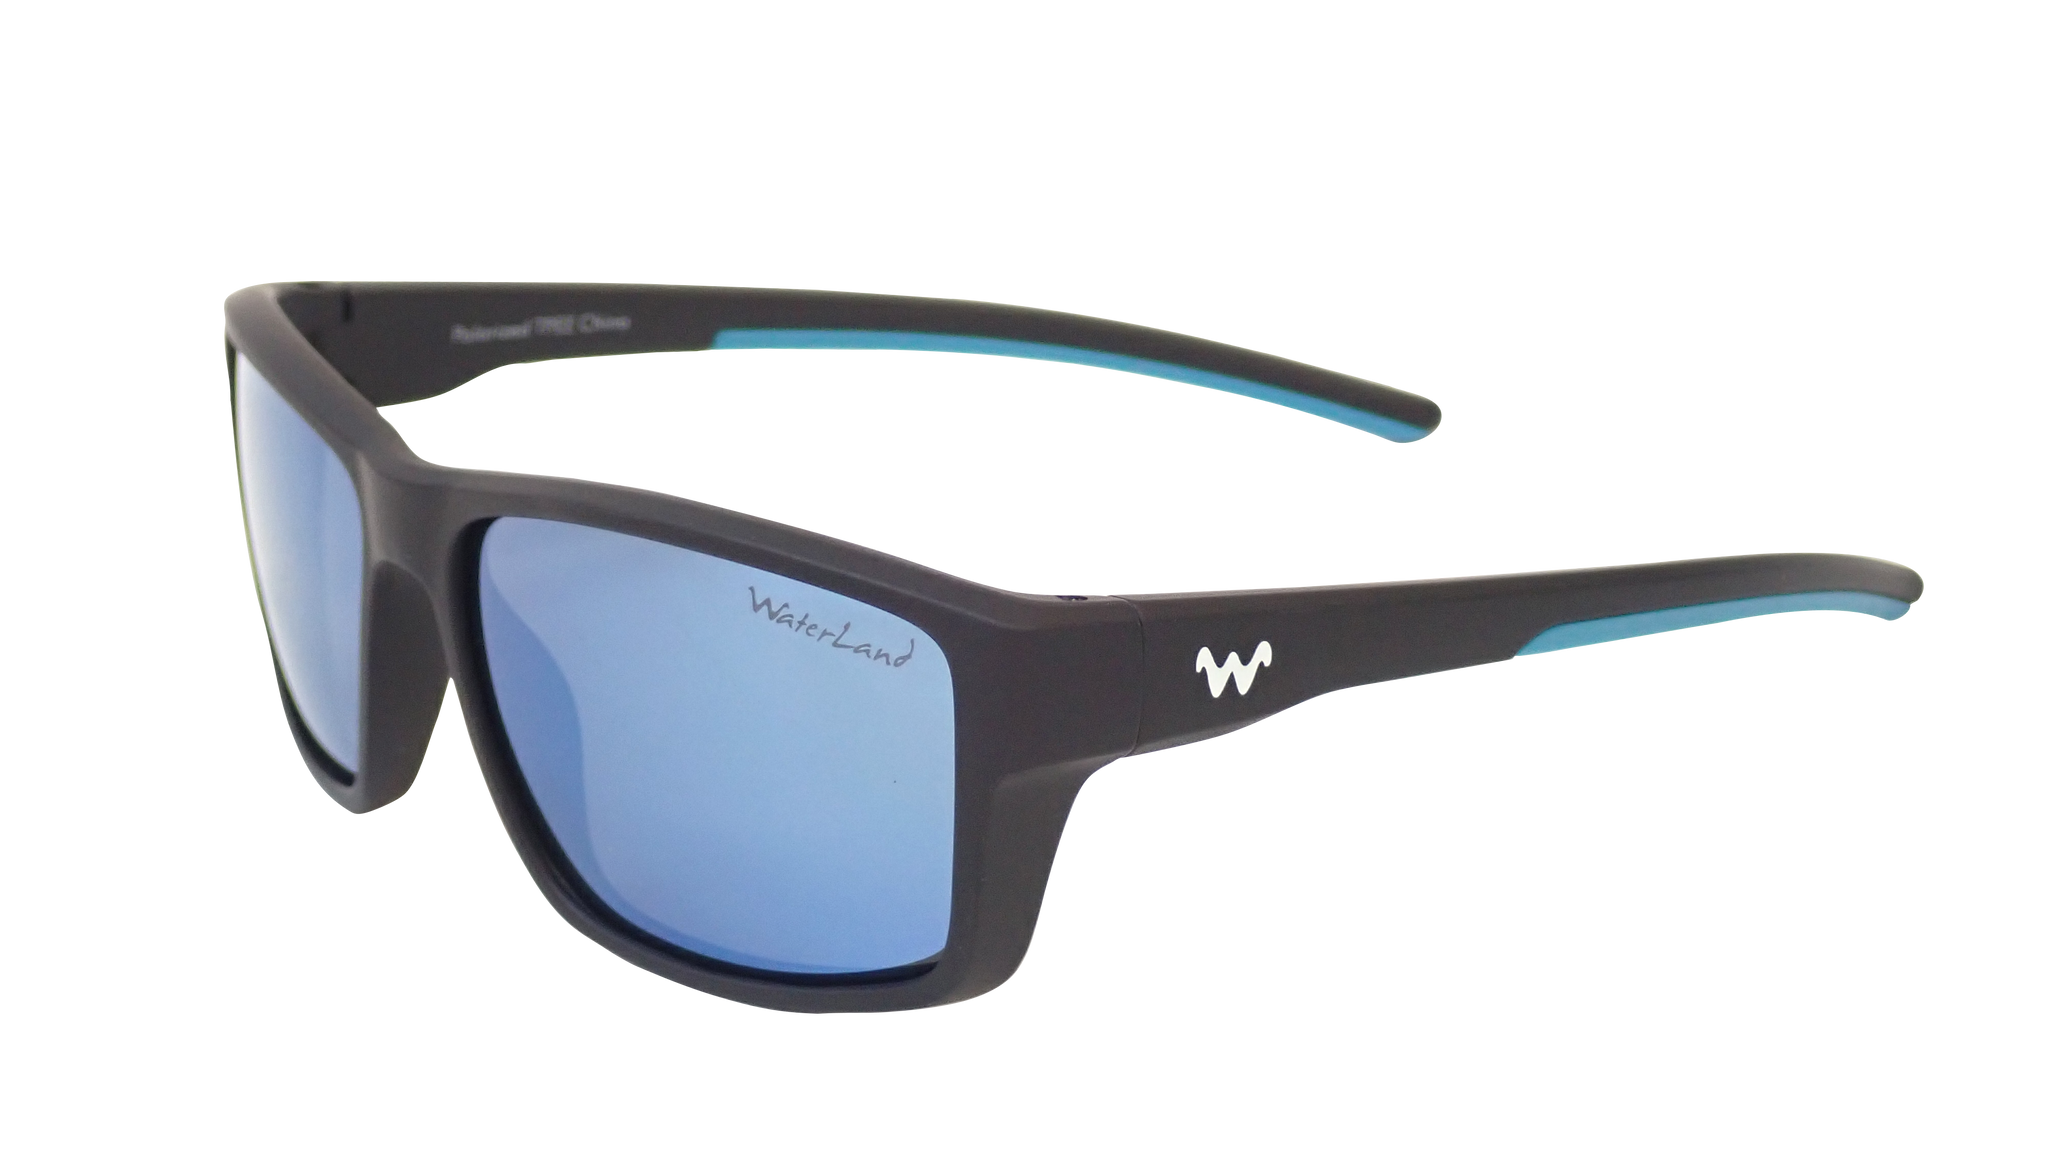 waterland fishing sunglasses On Sale